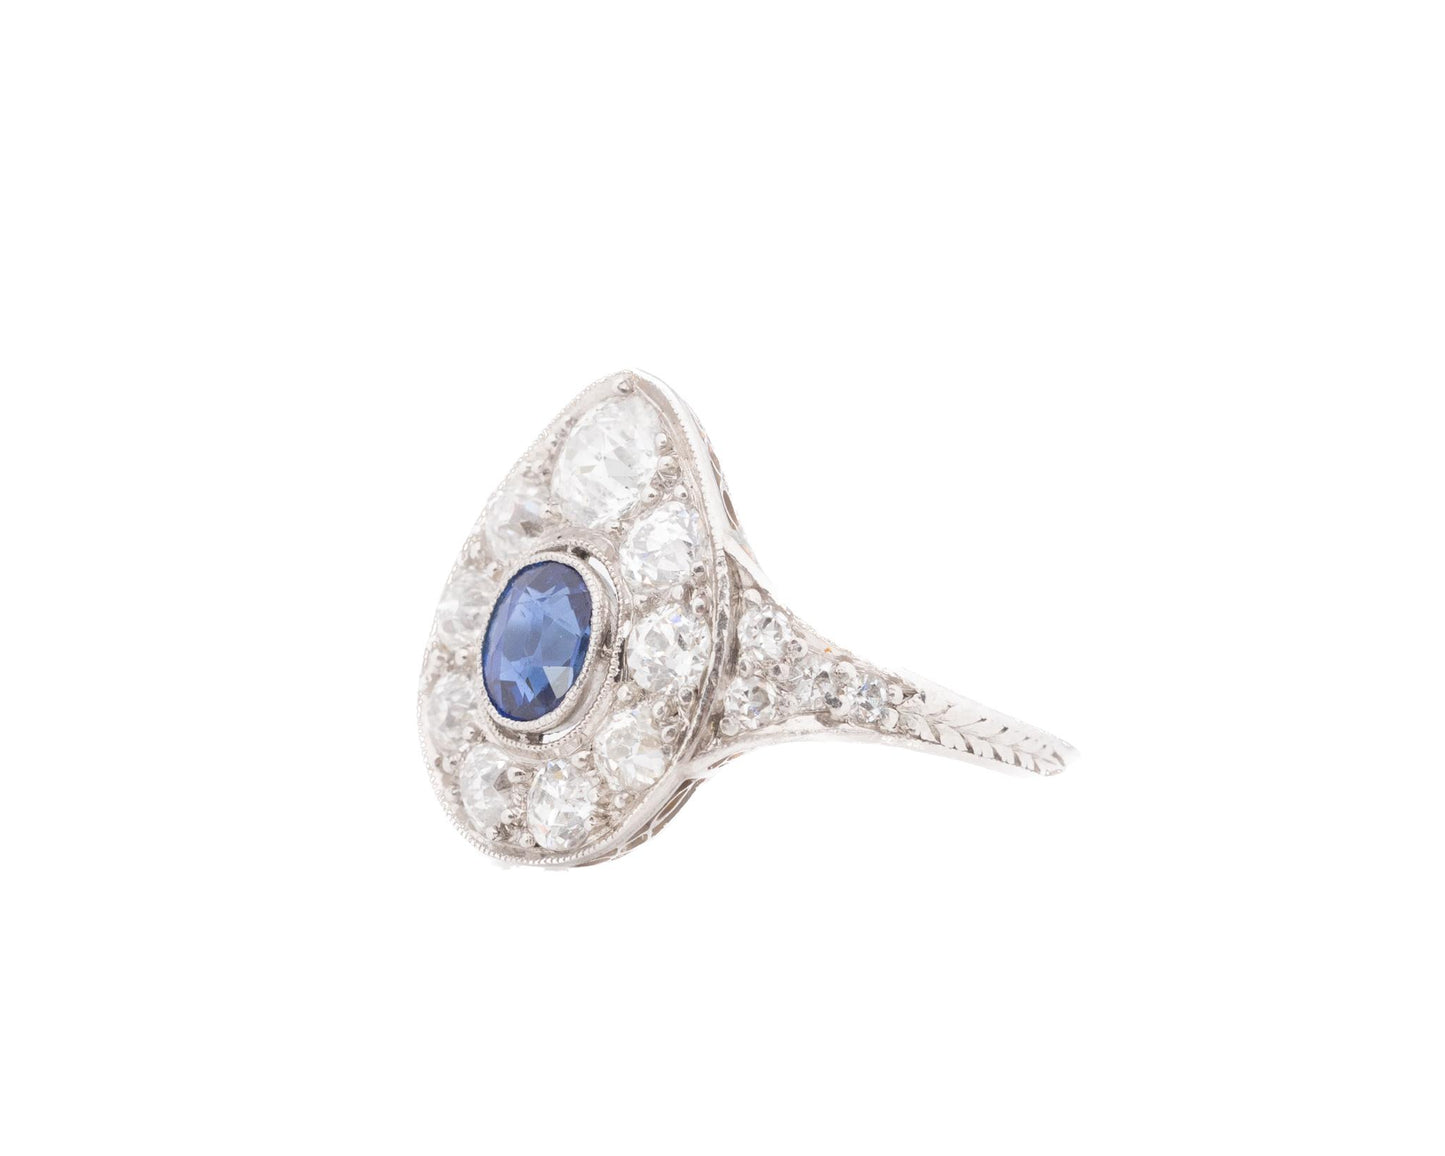 Circa 1926 Engraved Art Deco Unheated Sapphire and Diamond Ring